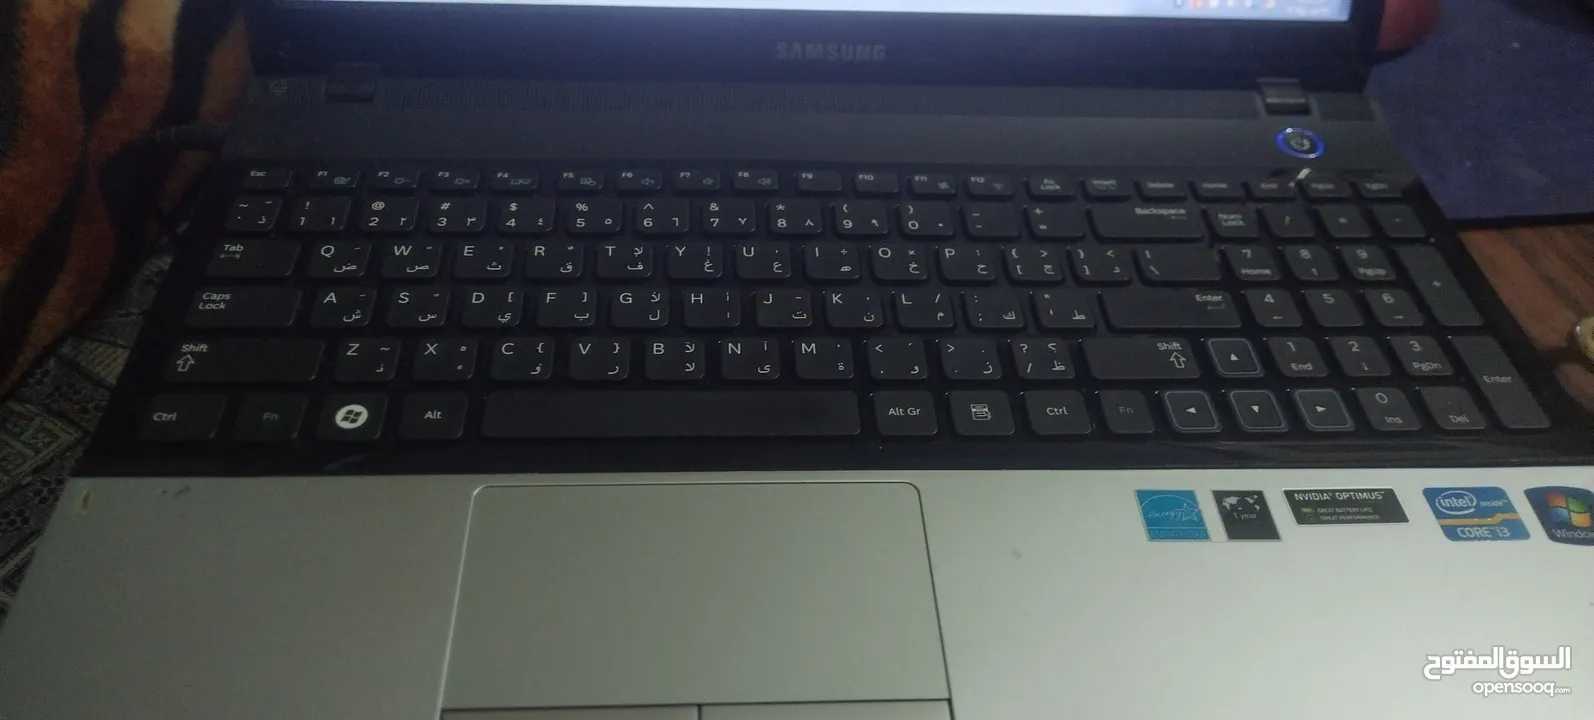 لأب توب سامسونج كور 3iFor Samsung Core 3i laptop